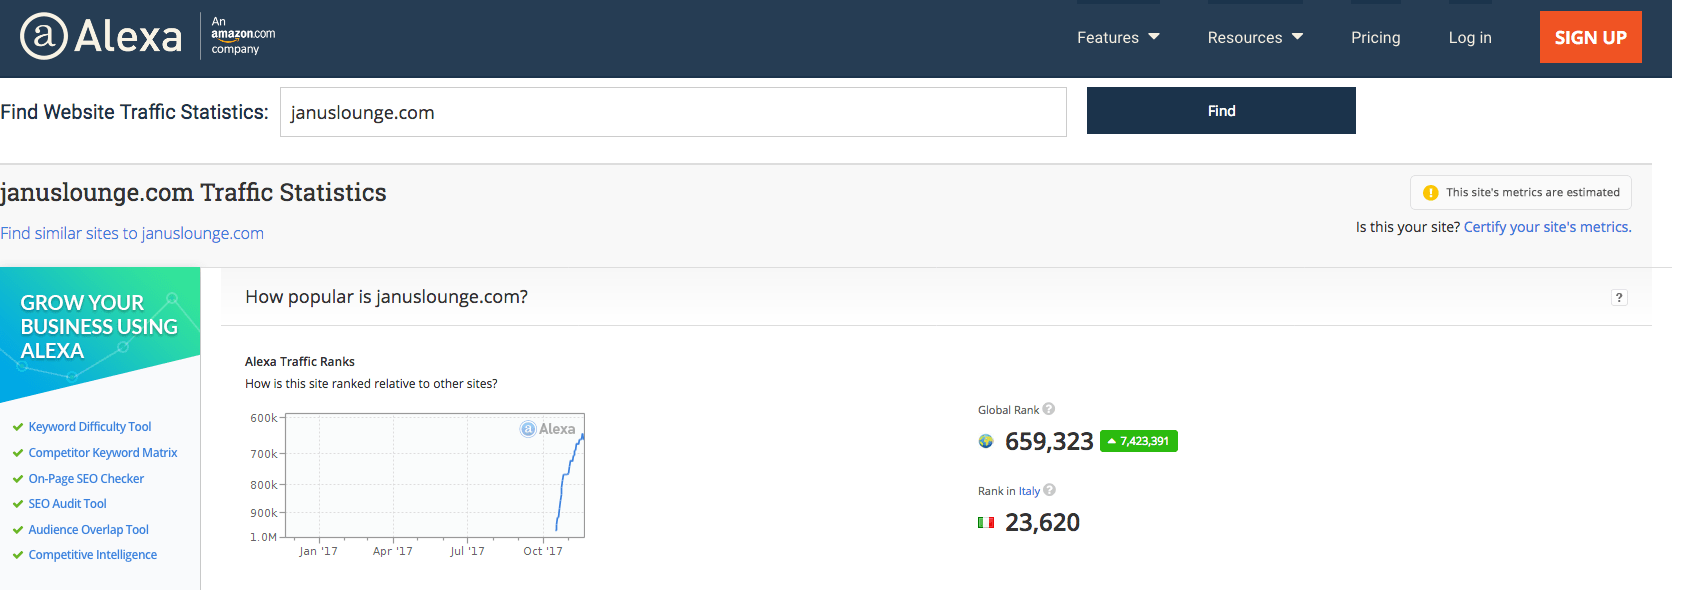 7.000.000 di posizioni scalate su Alexa in soli 3 mesi